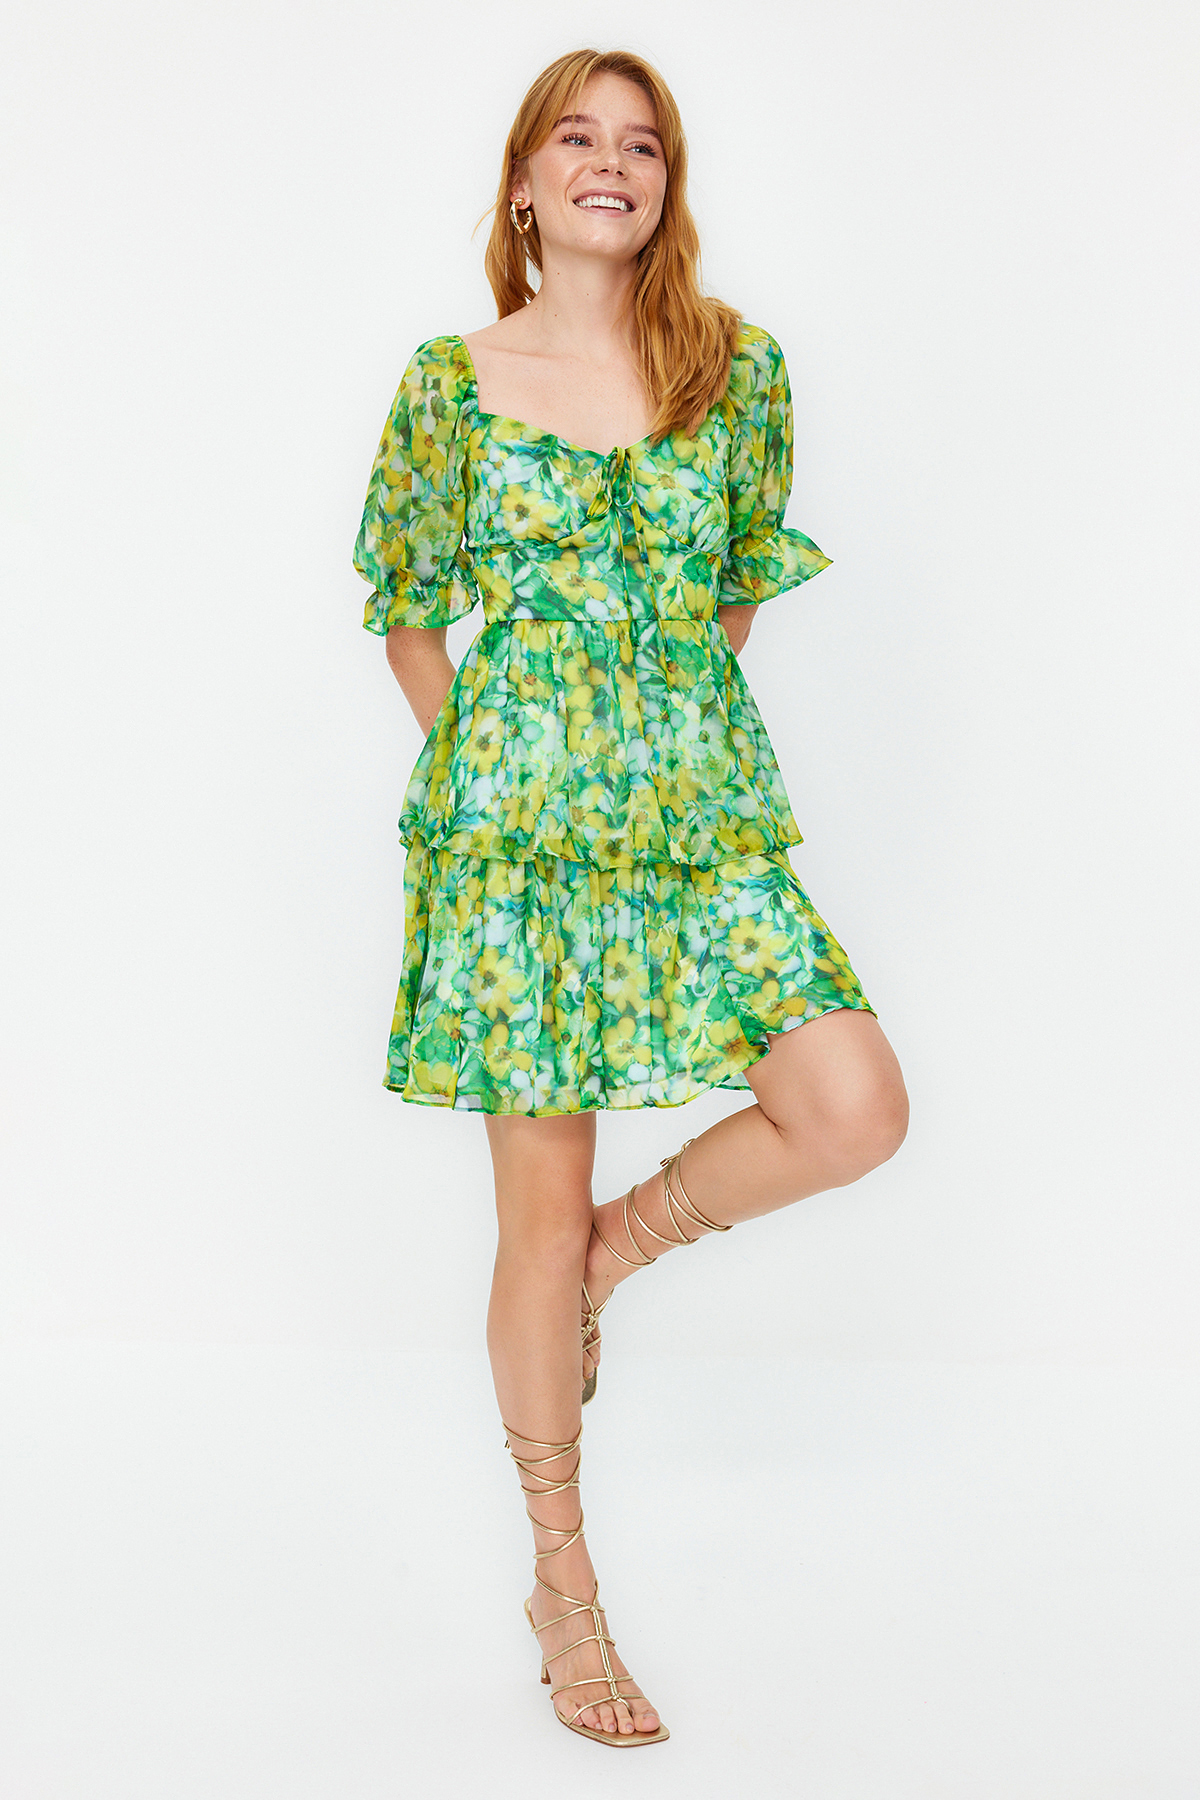 Trendyol Green Skirt Flounced Floral Patterned Chiffon Woven